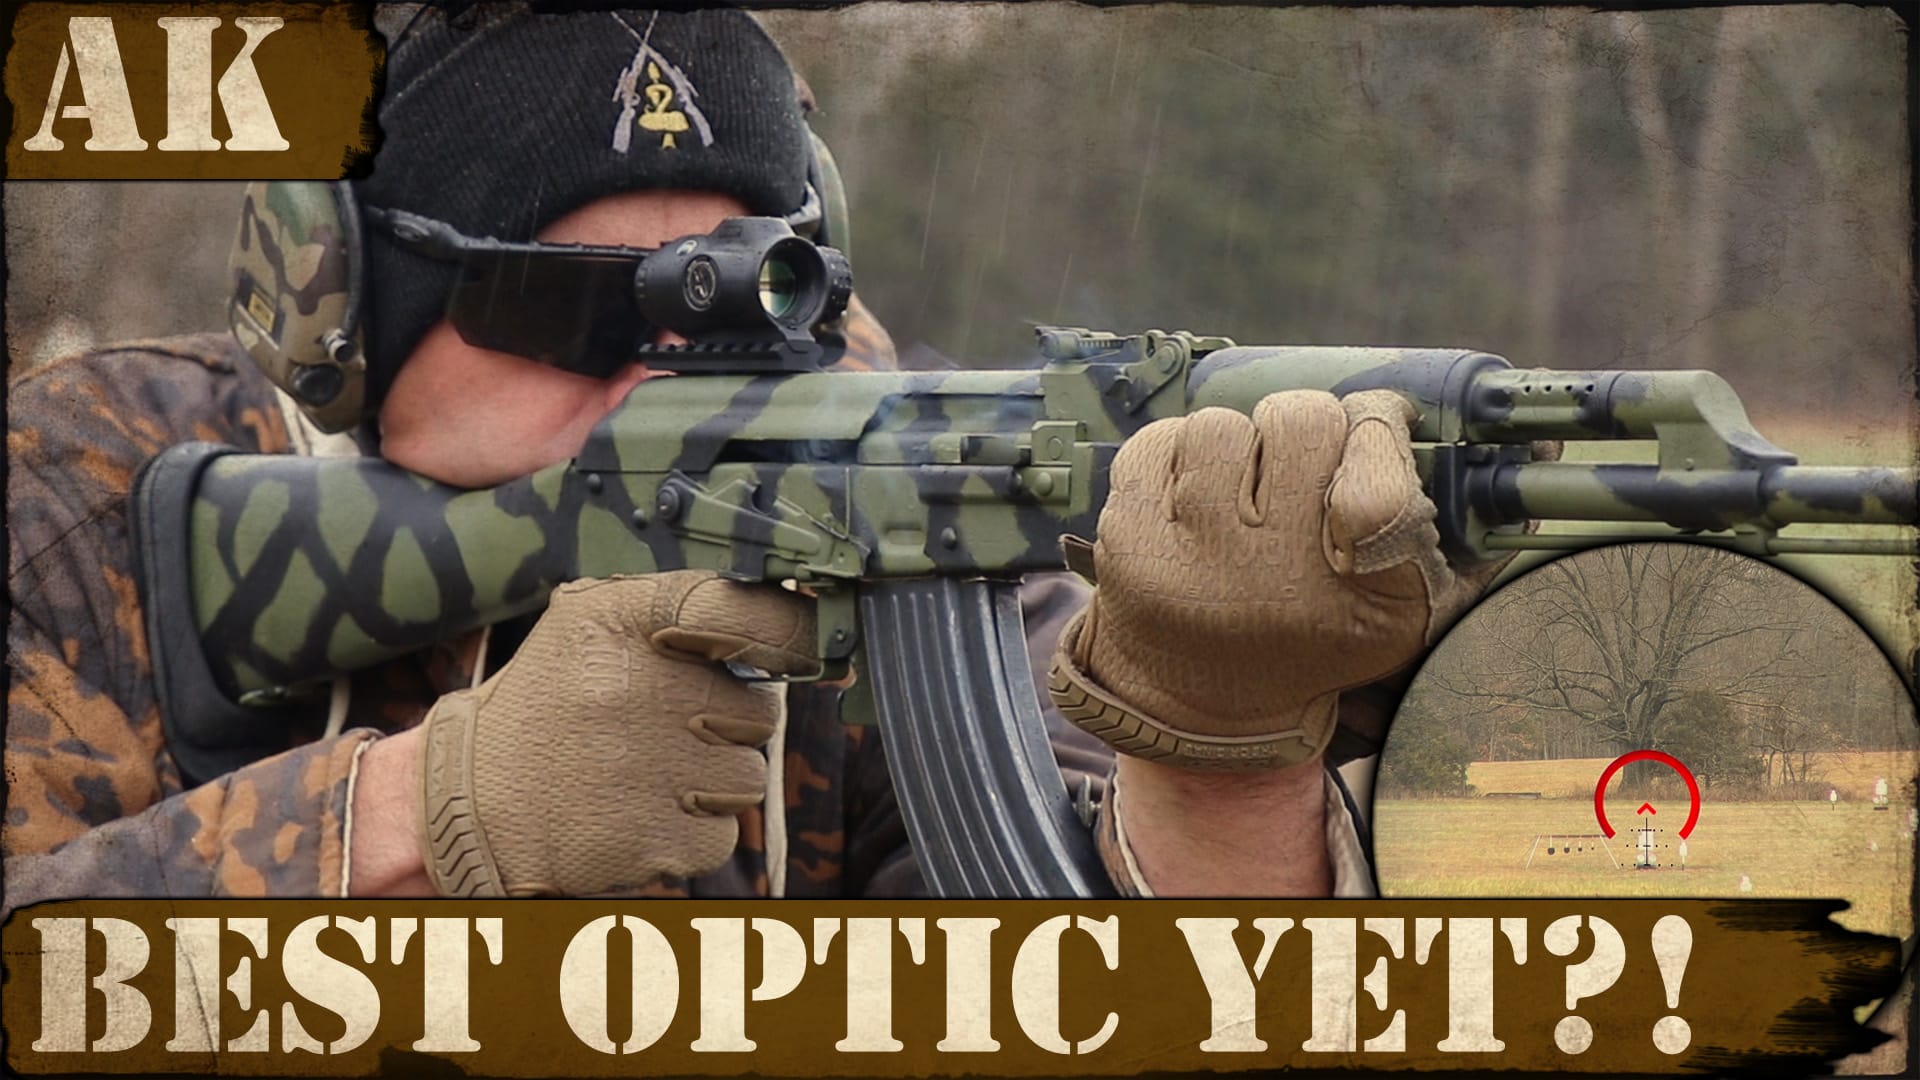 AK Best Optic Yet?!